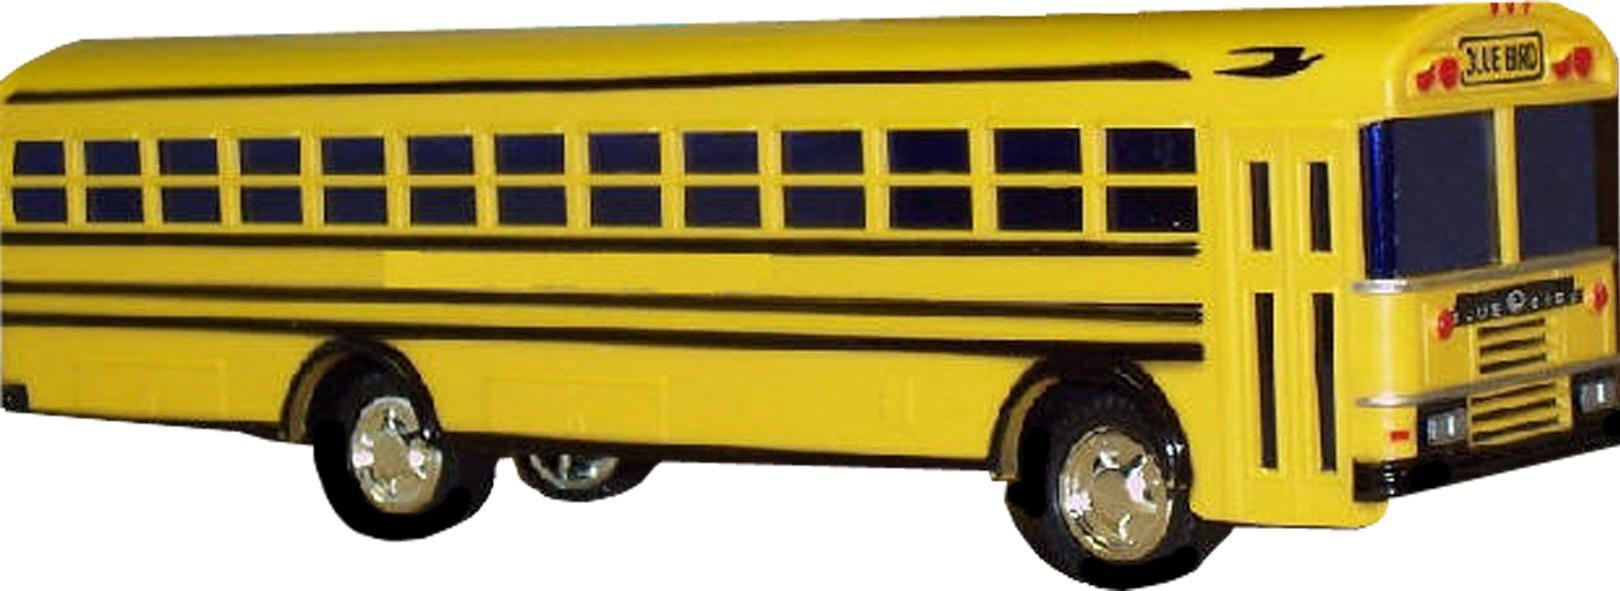 Blue Bird Bank Logo - Blue Bird Model School Bus. model, bus, bus, bank, bus, bank, promotion